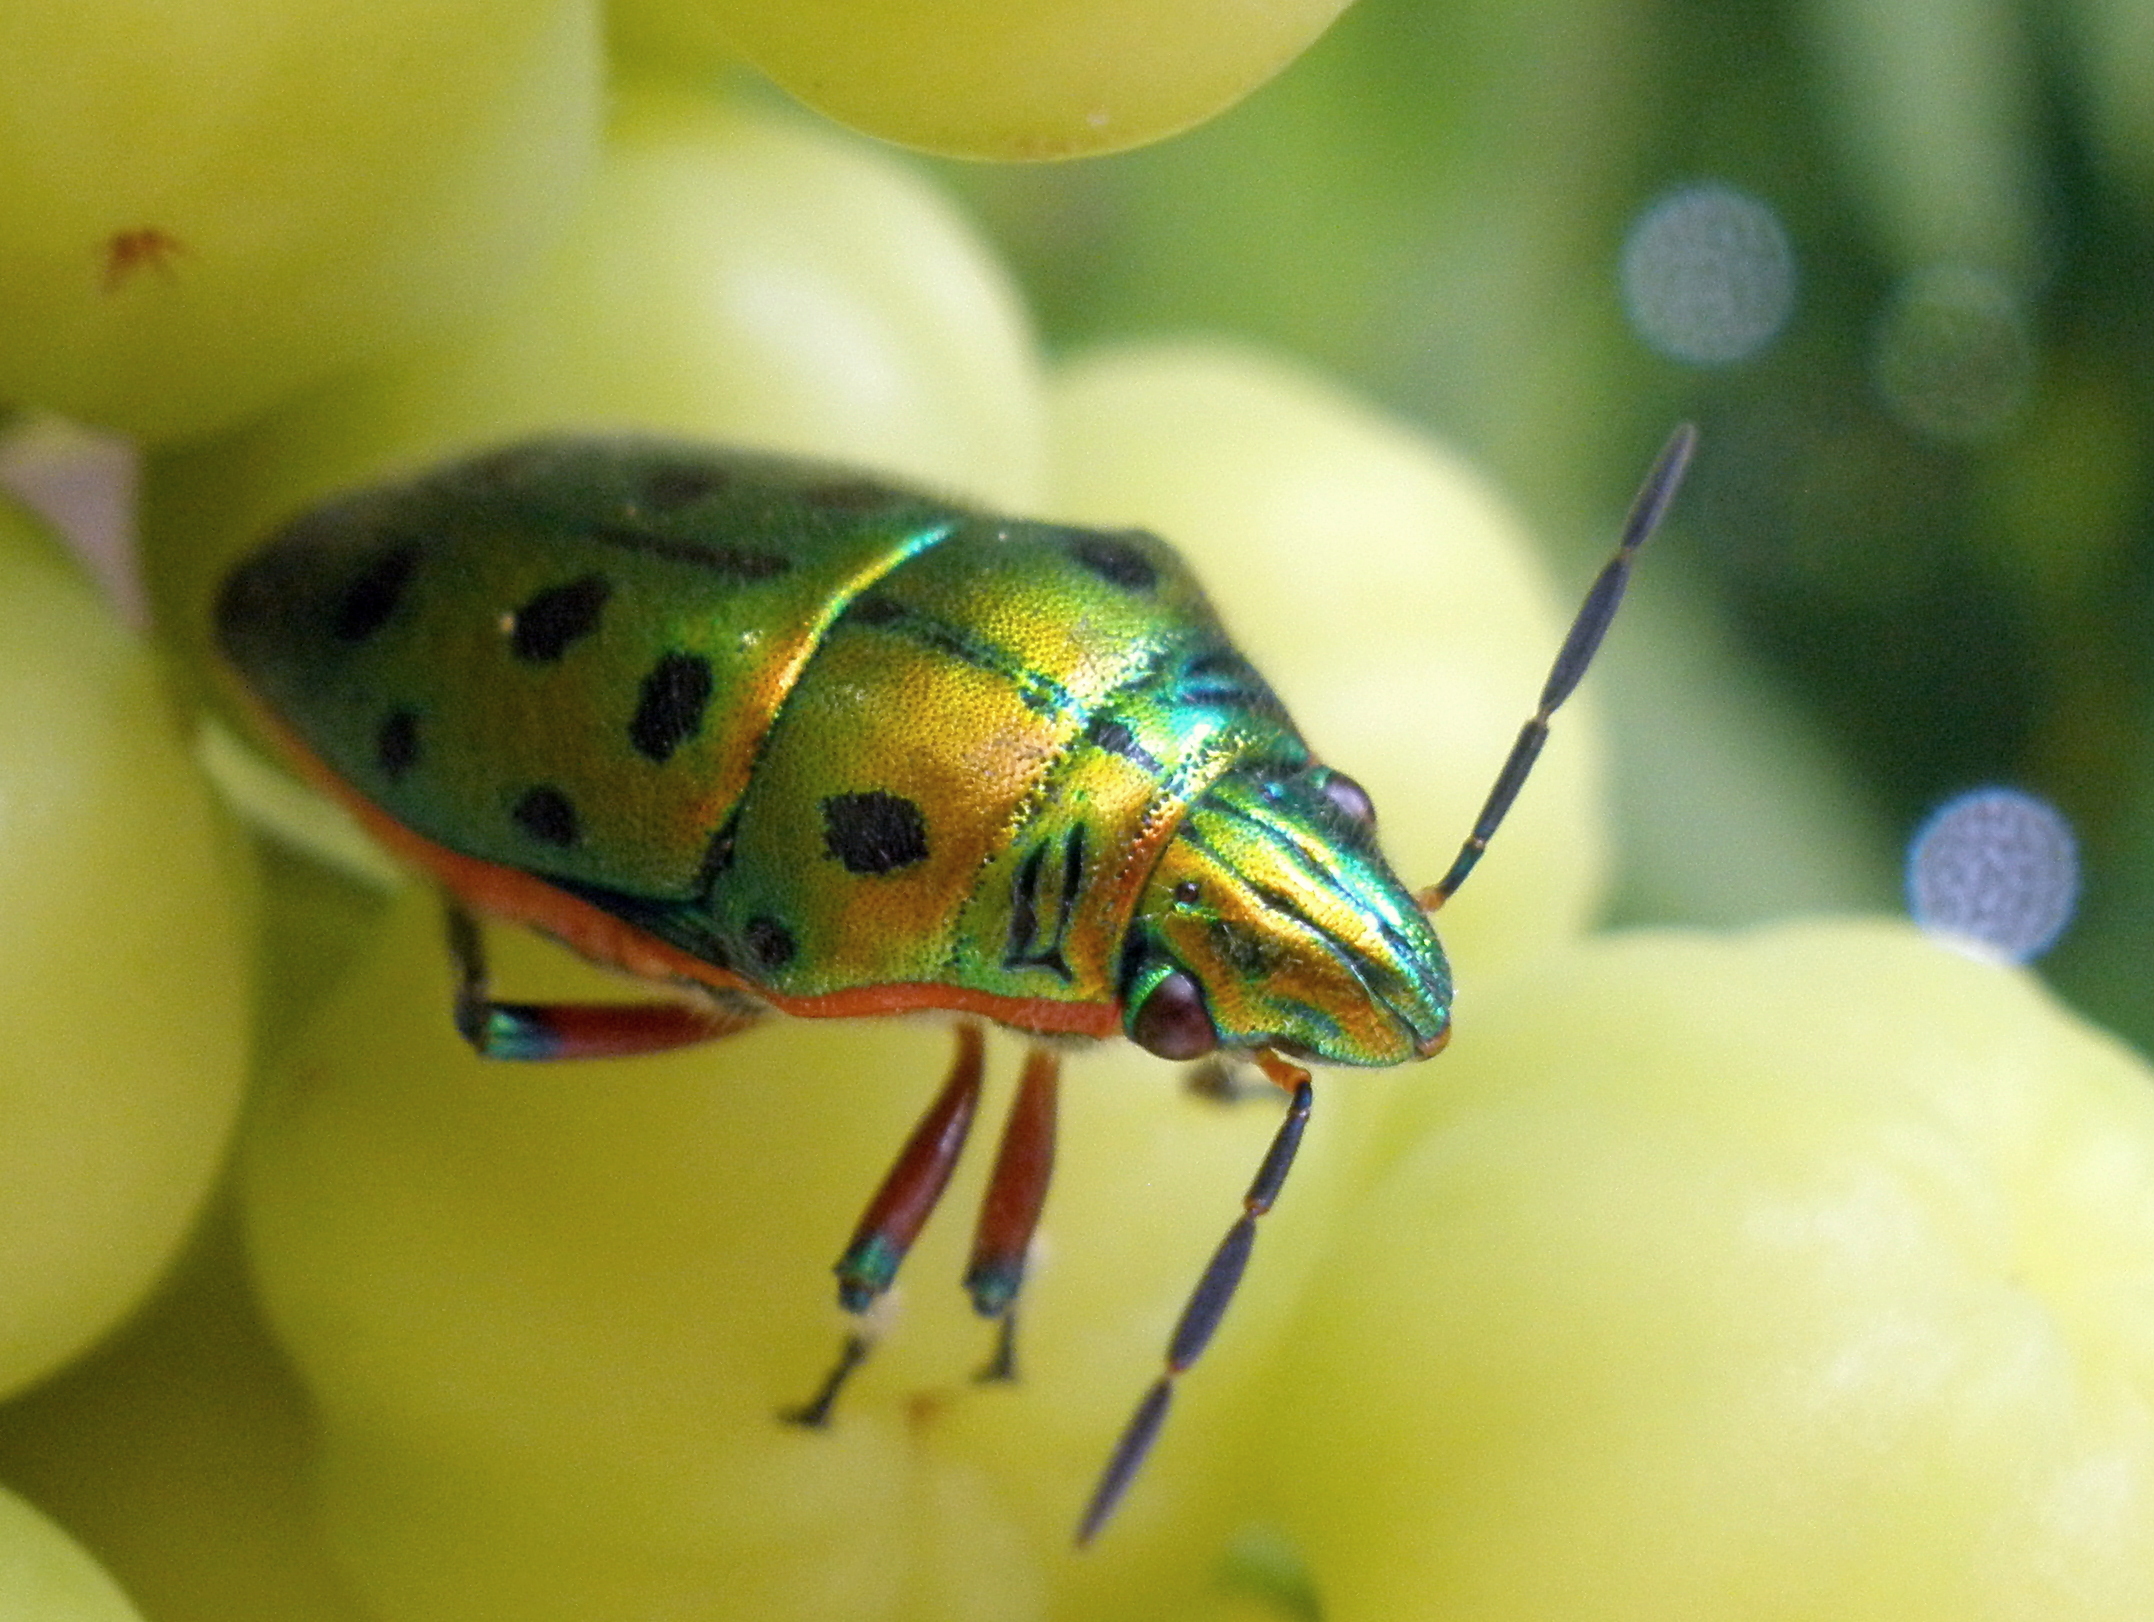 File:Shiny green bug.JPG - Wikimedia Commons